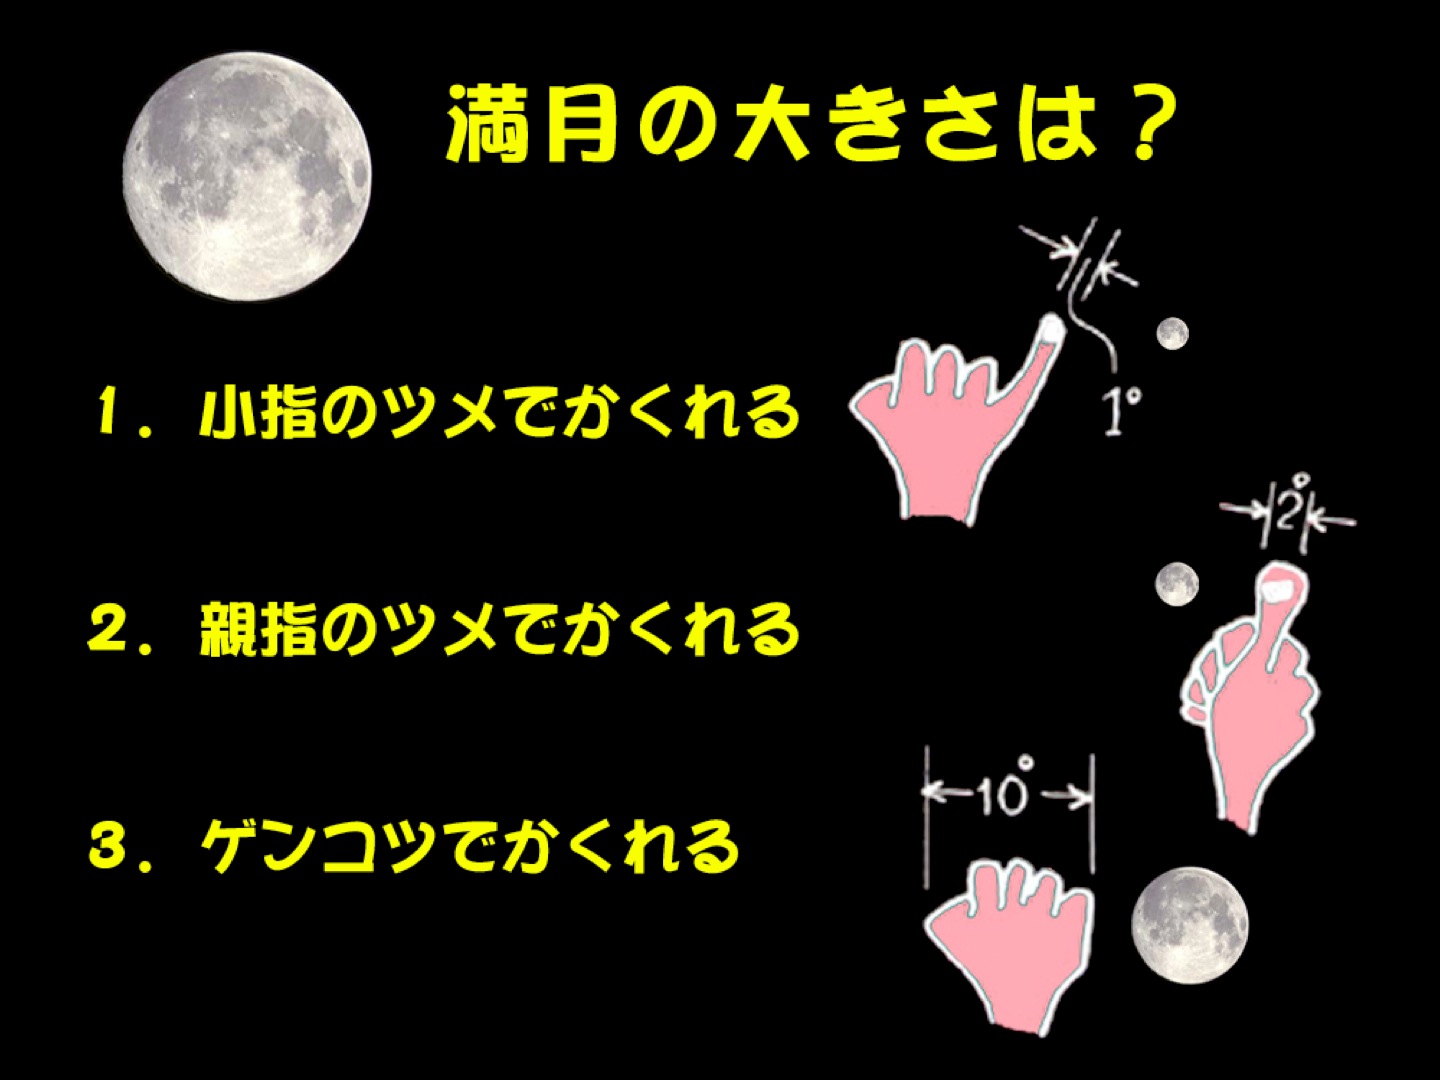 http://www.ncsm.city.nagoya.jp/study/astro/m.018-crop.jpg